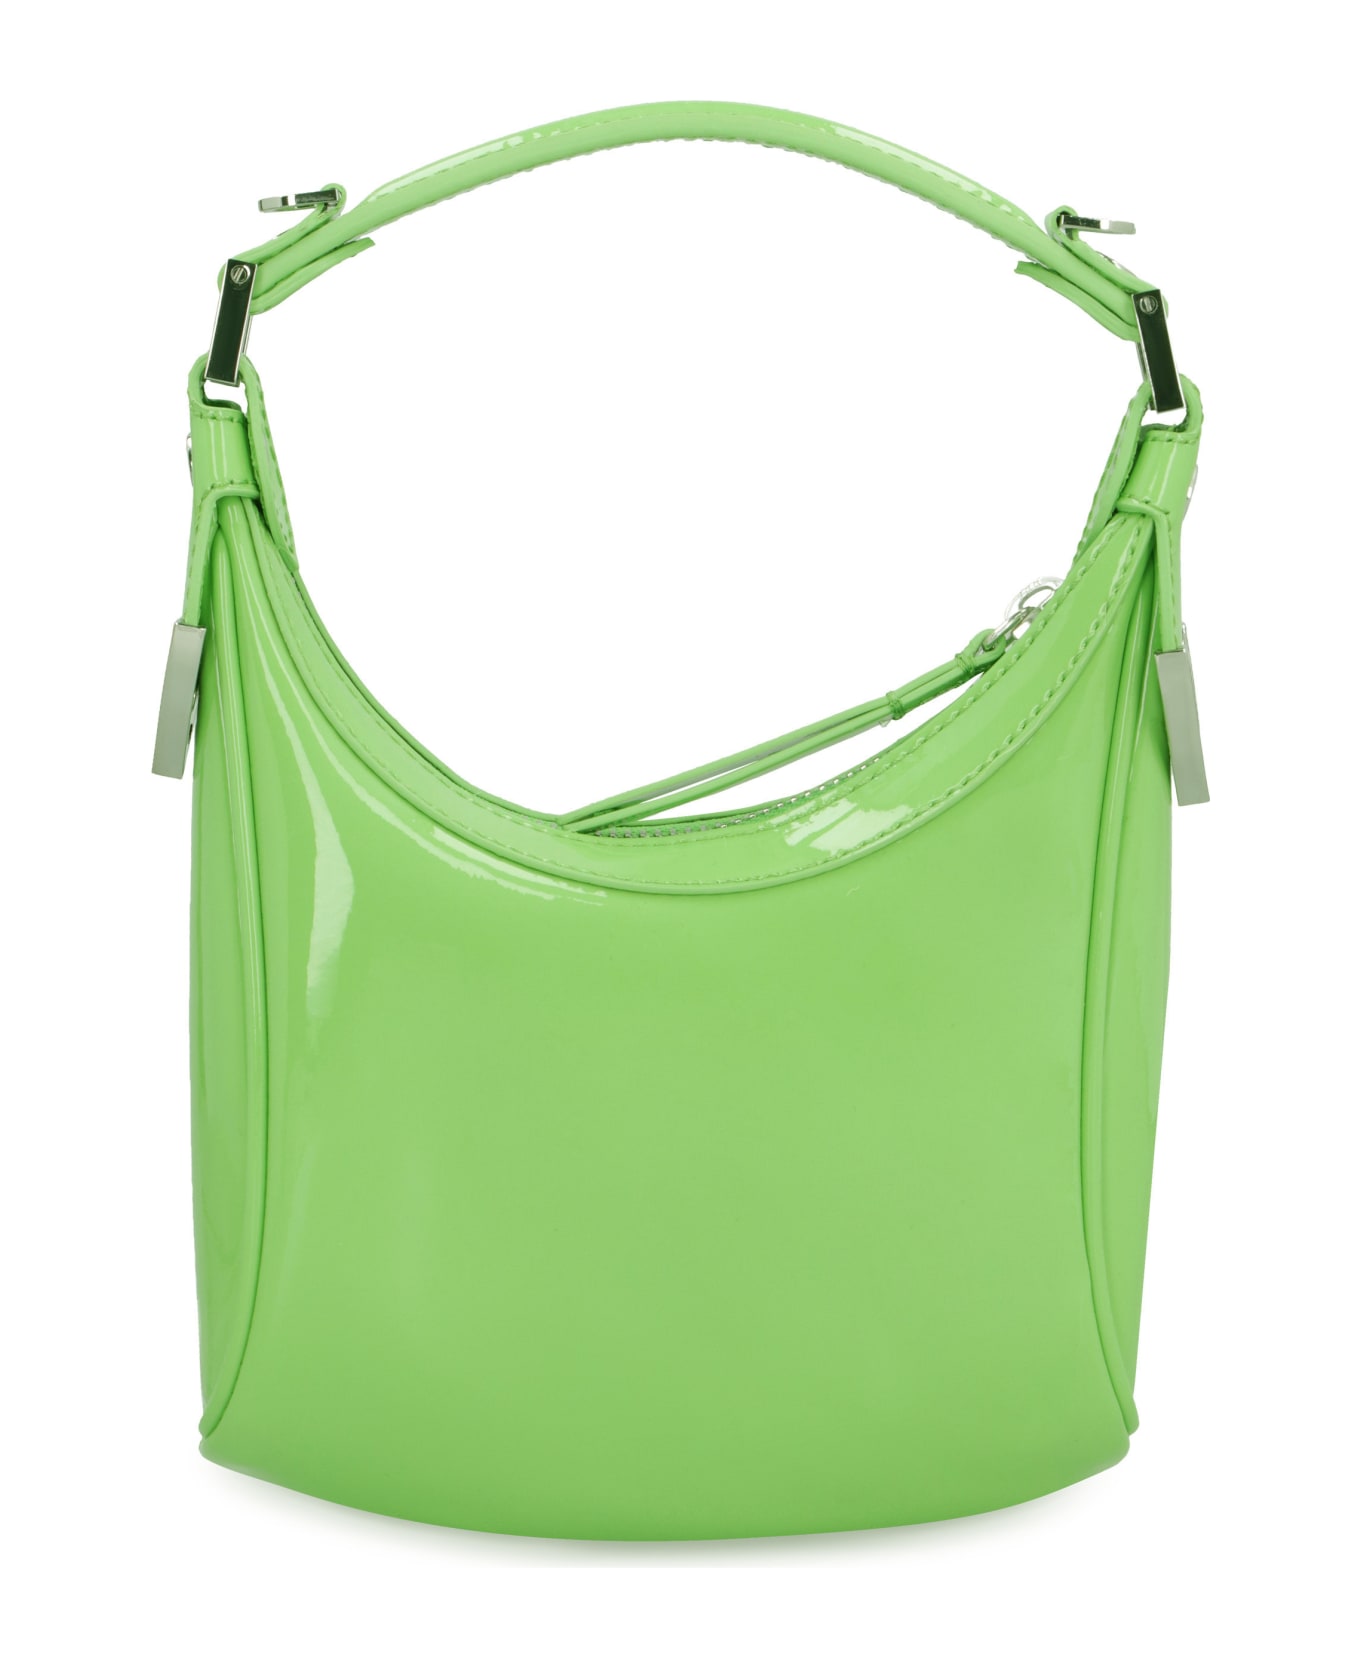 BY FAR Cosmo Leather Handbag - green